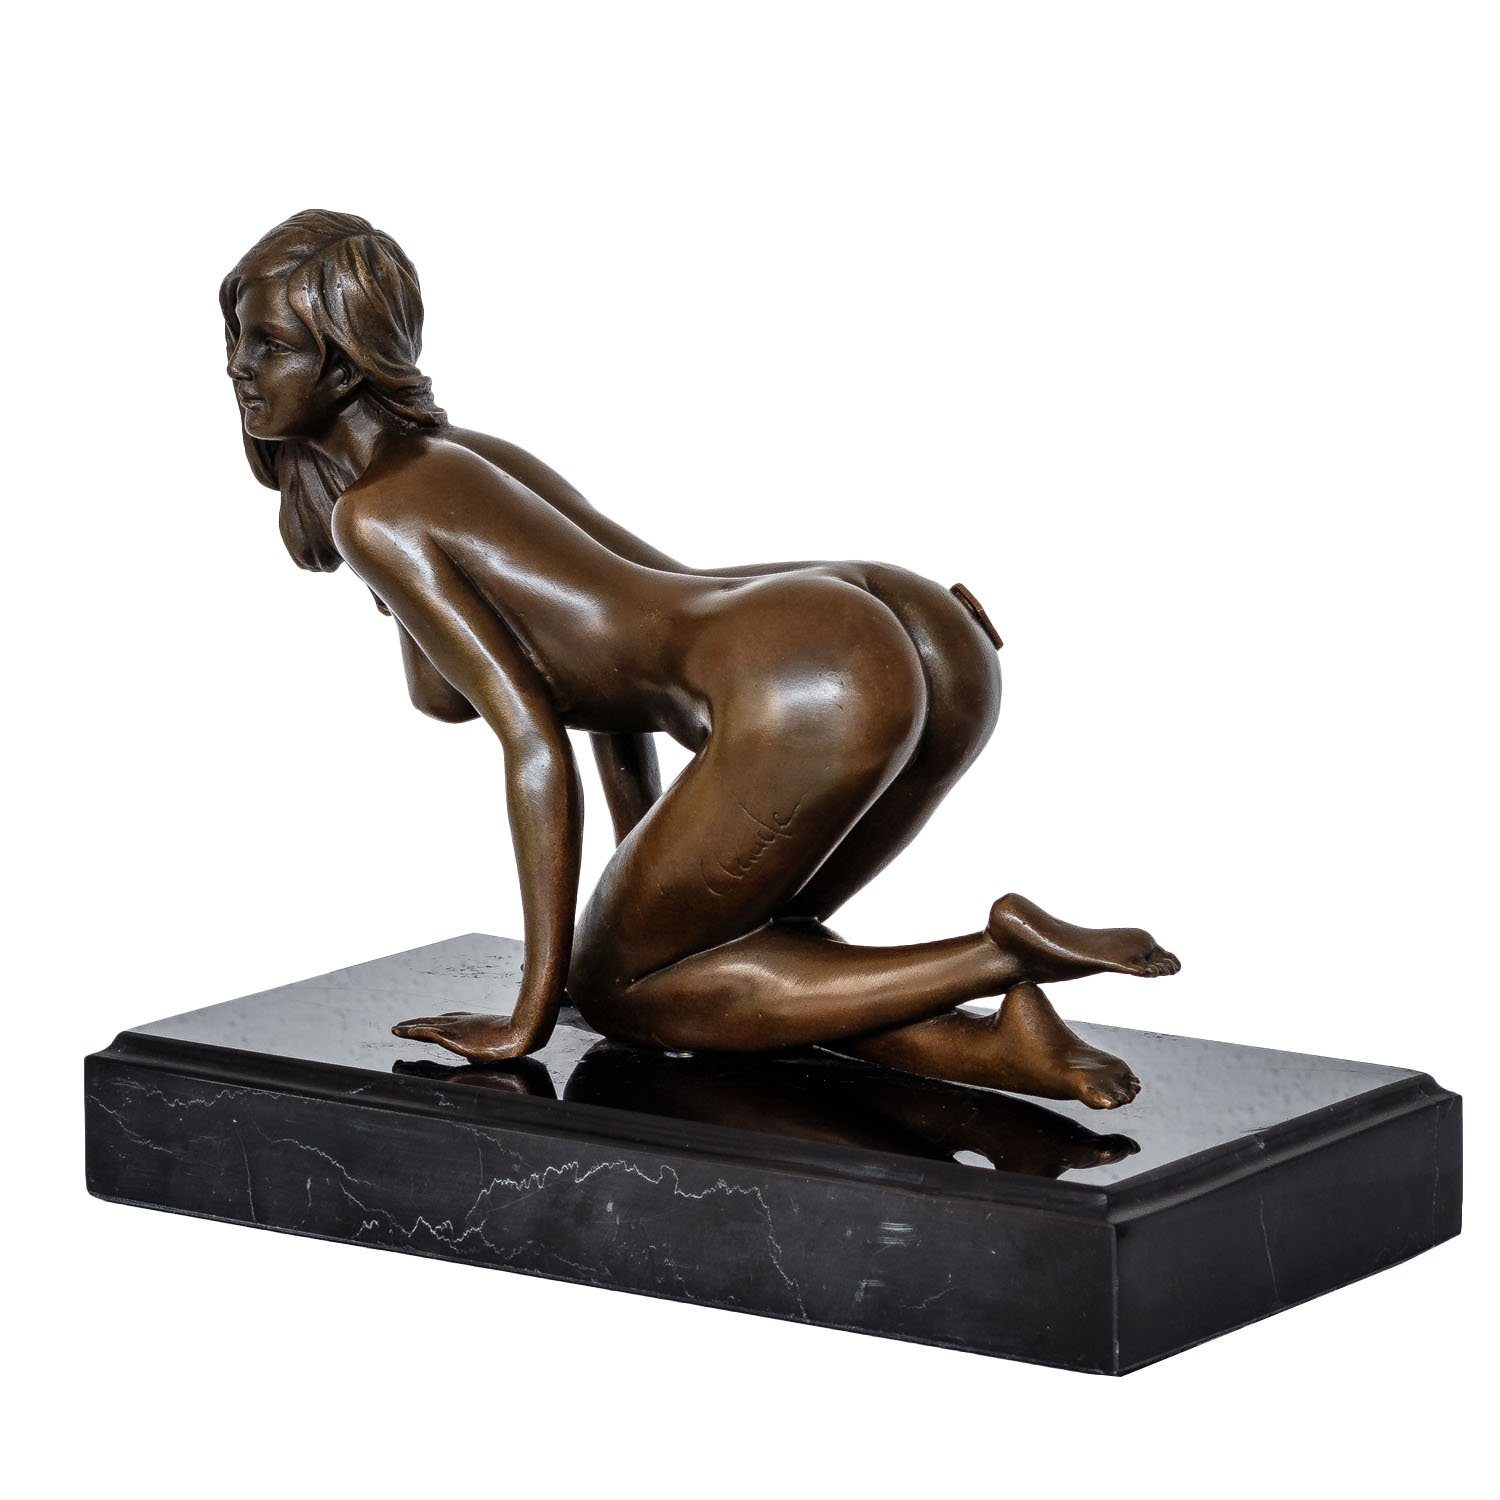 Aubaho Skulptur Frau Figur Kunst Erotik 21cm Bronzeskulptur im Bronze Antik-Stil